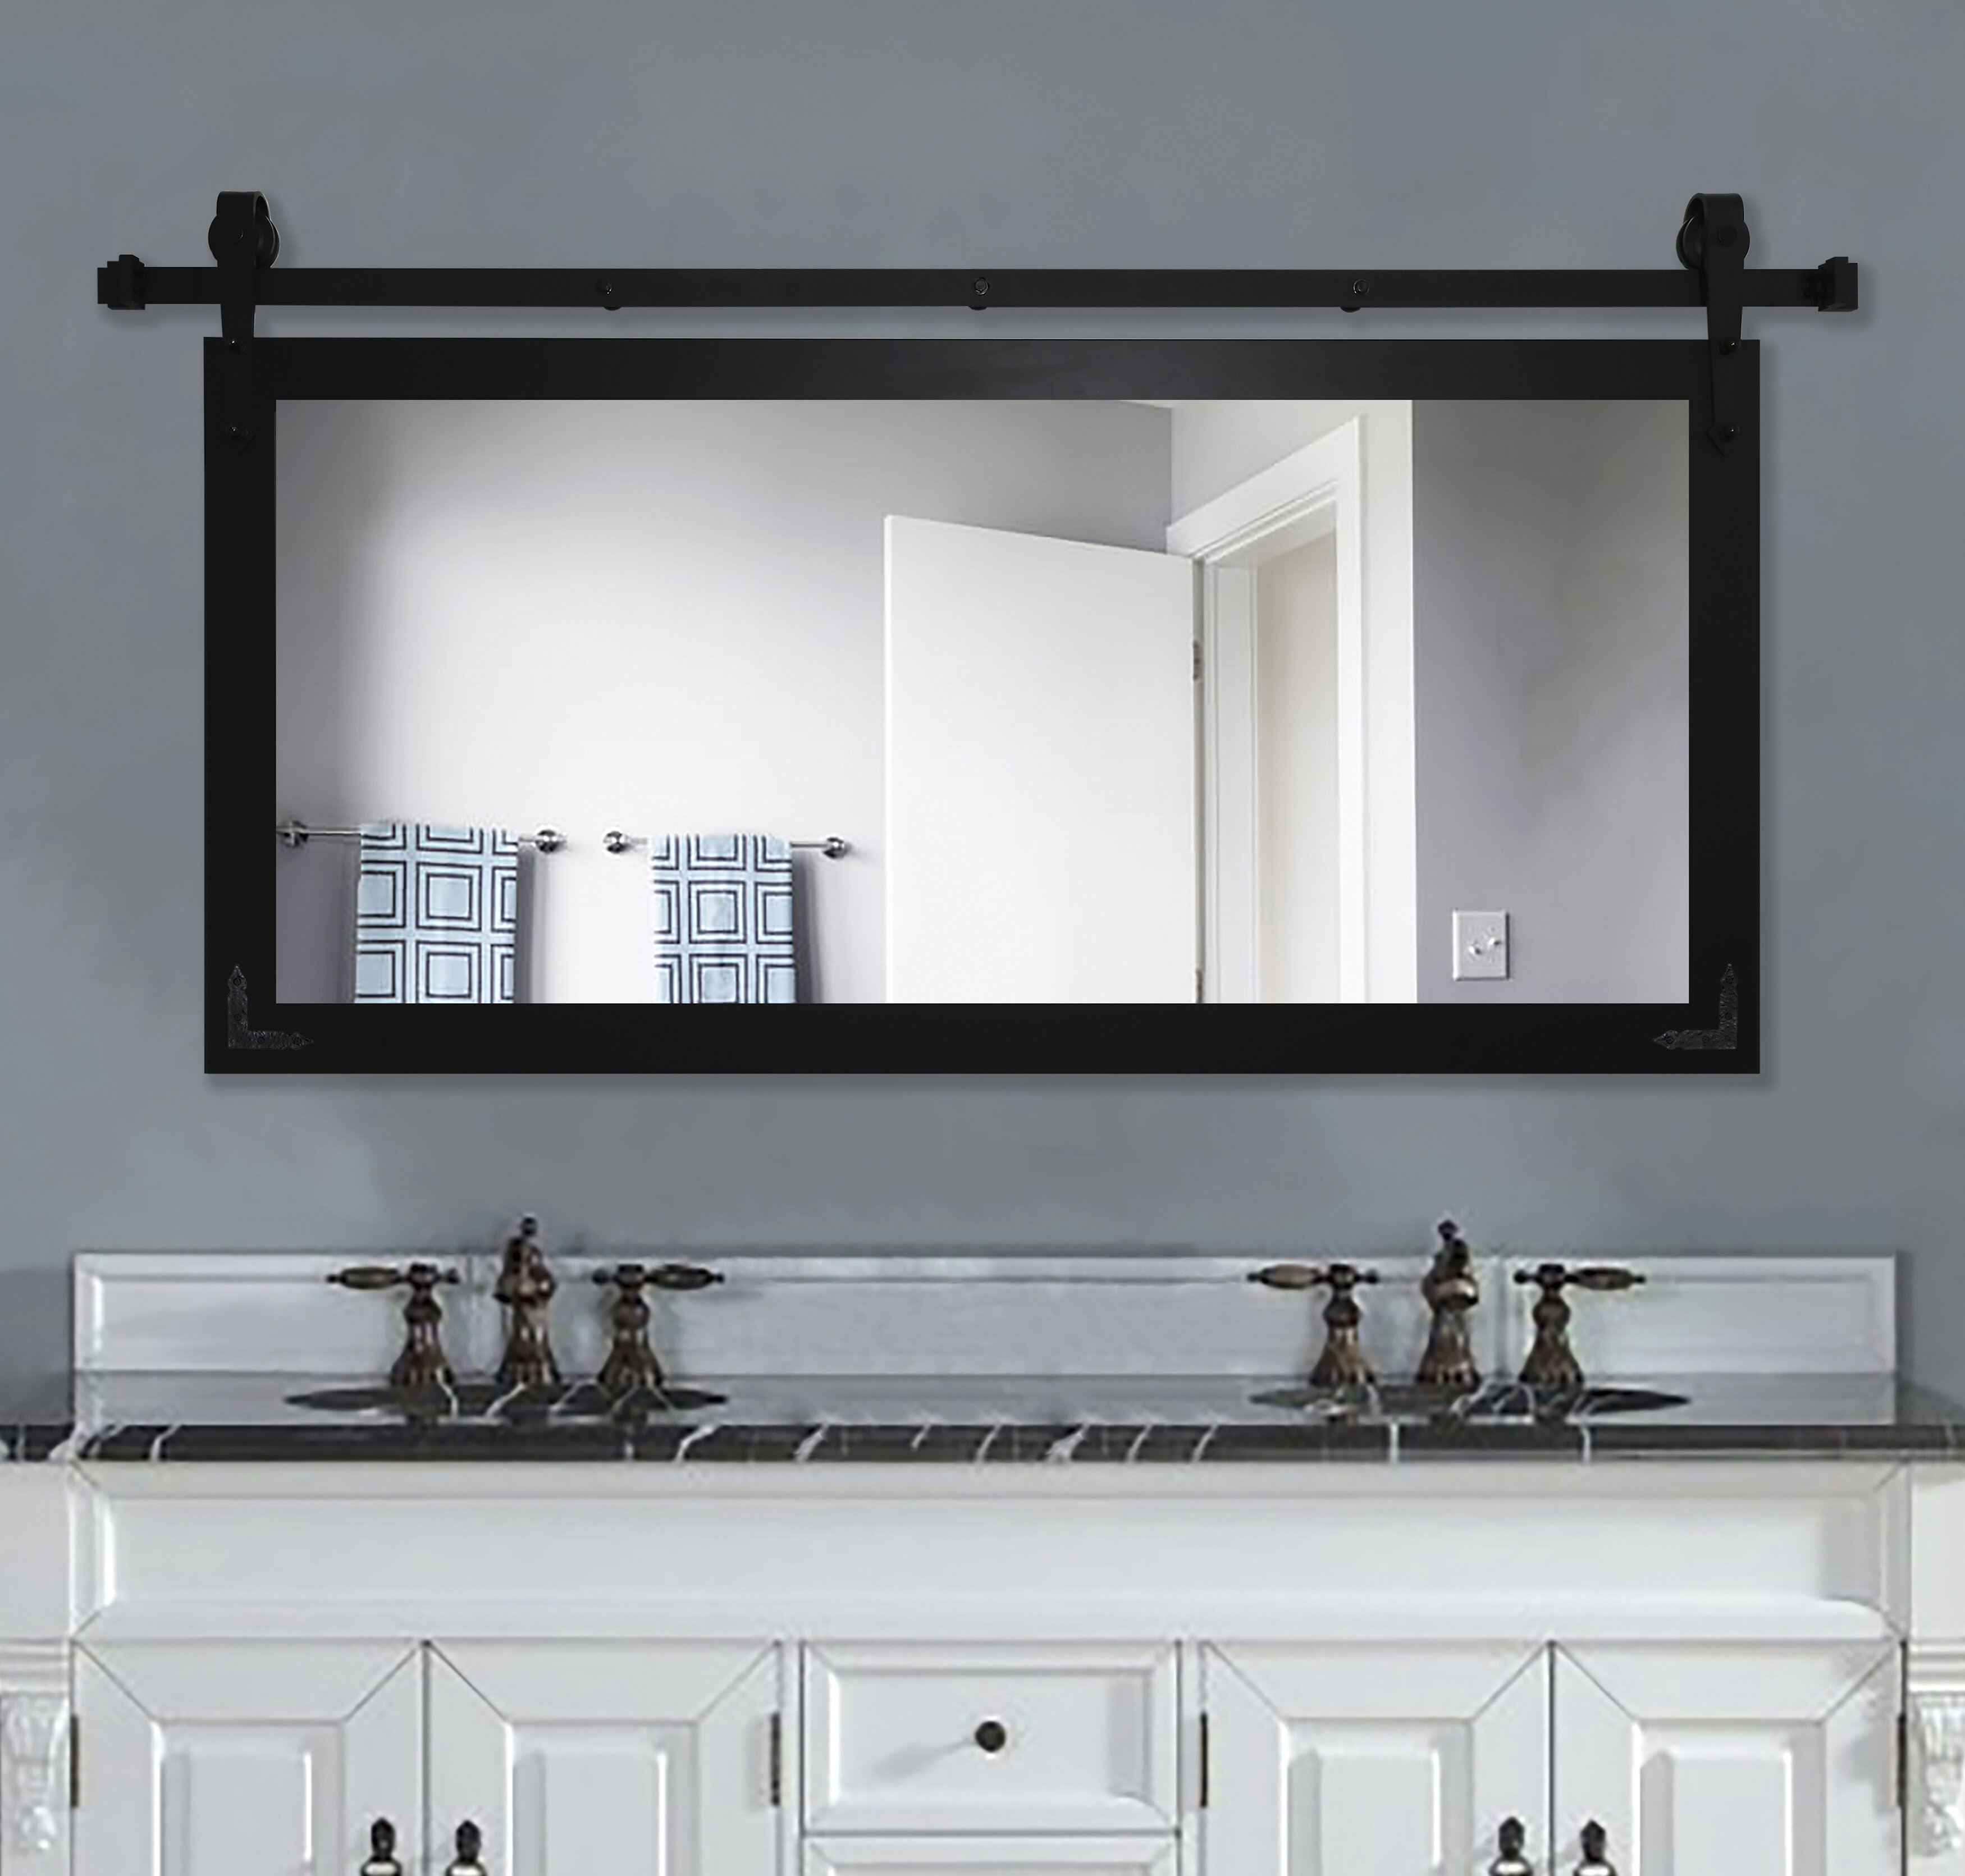 Laurel Foundry Modern Farmhouse Abraham Bathroom Vanity Wall Mirror Reviews Wayfair